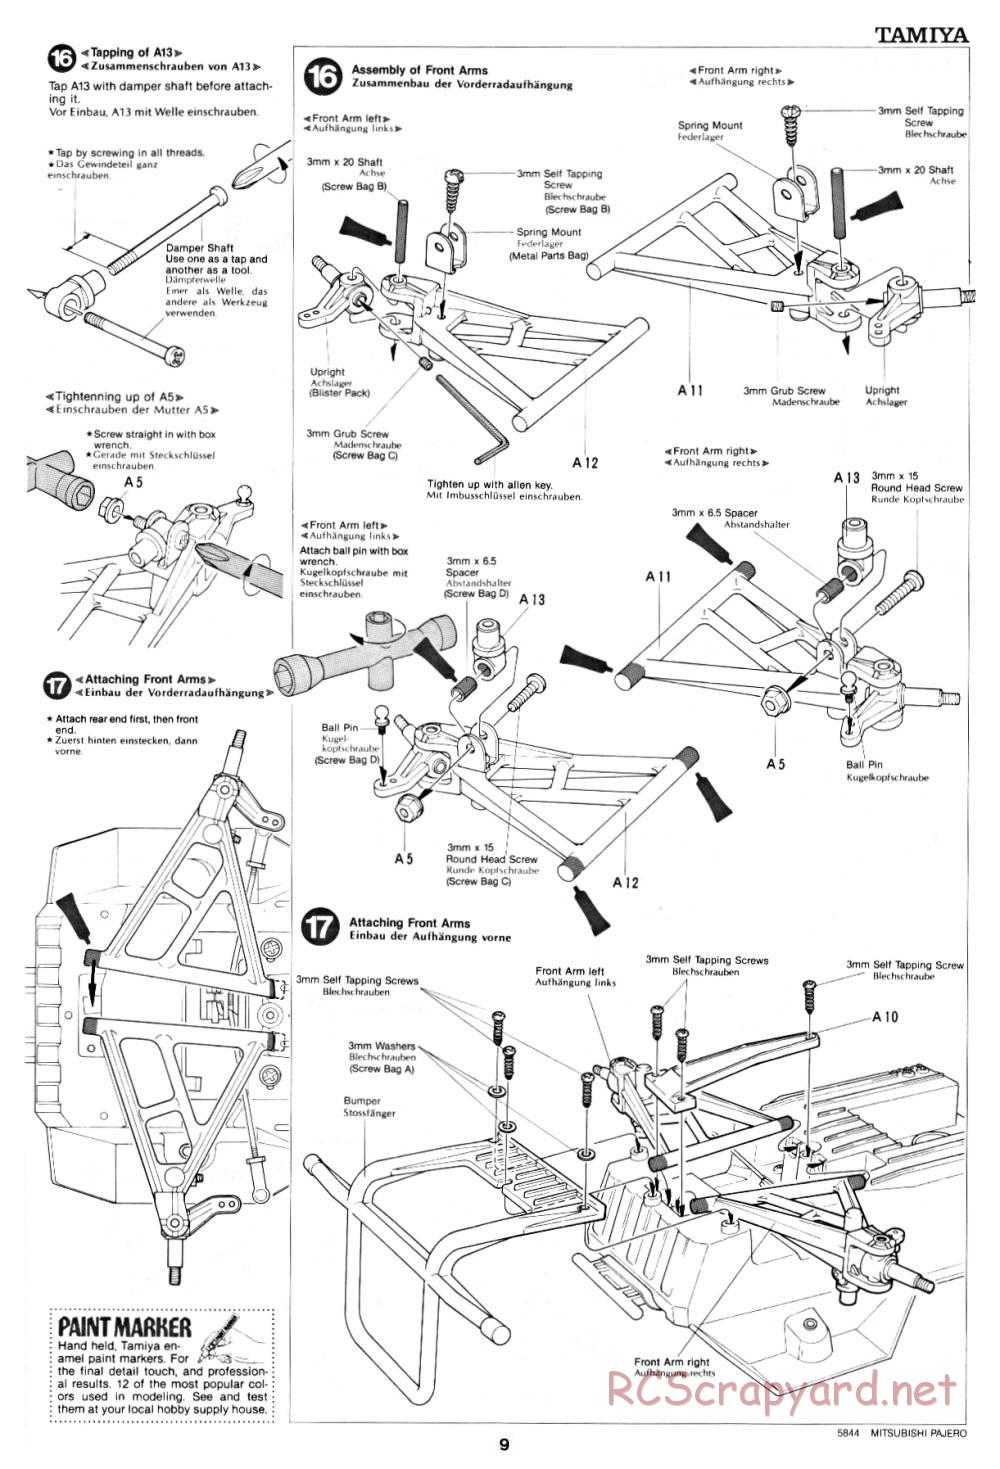 Tamiya - Mitsubishi Pajero - 58044 - Manual - Page 9